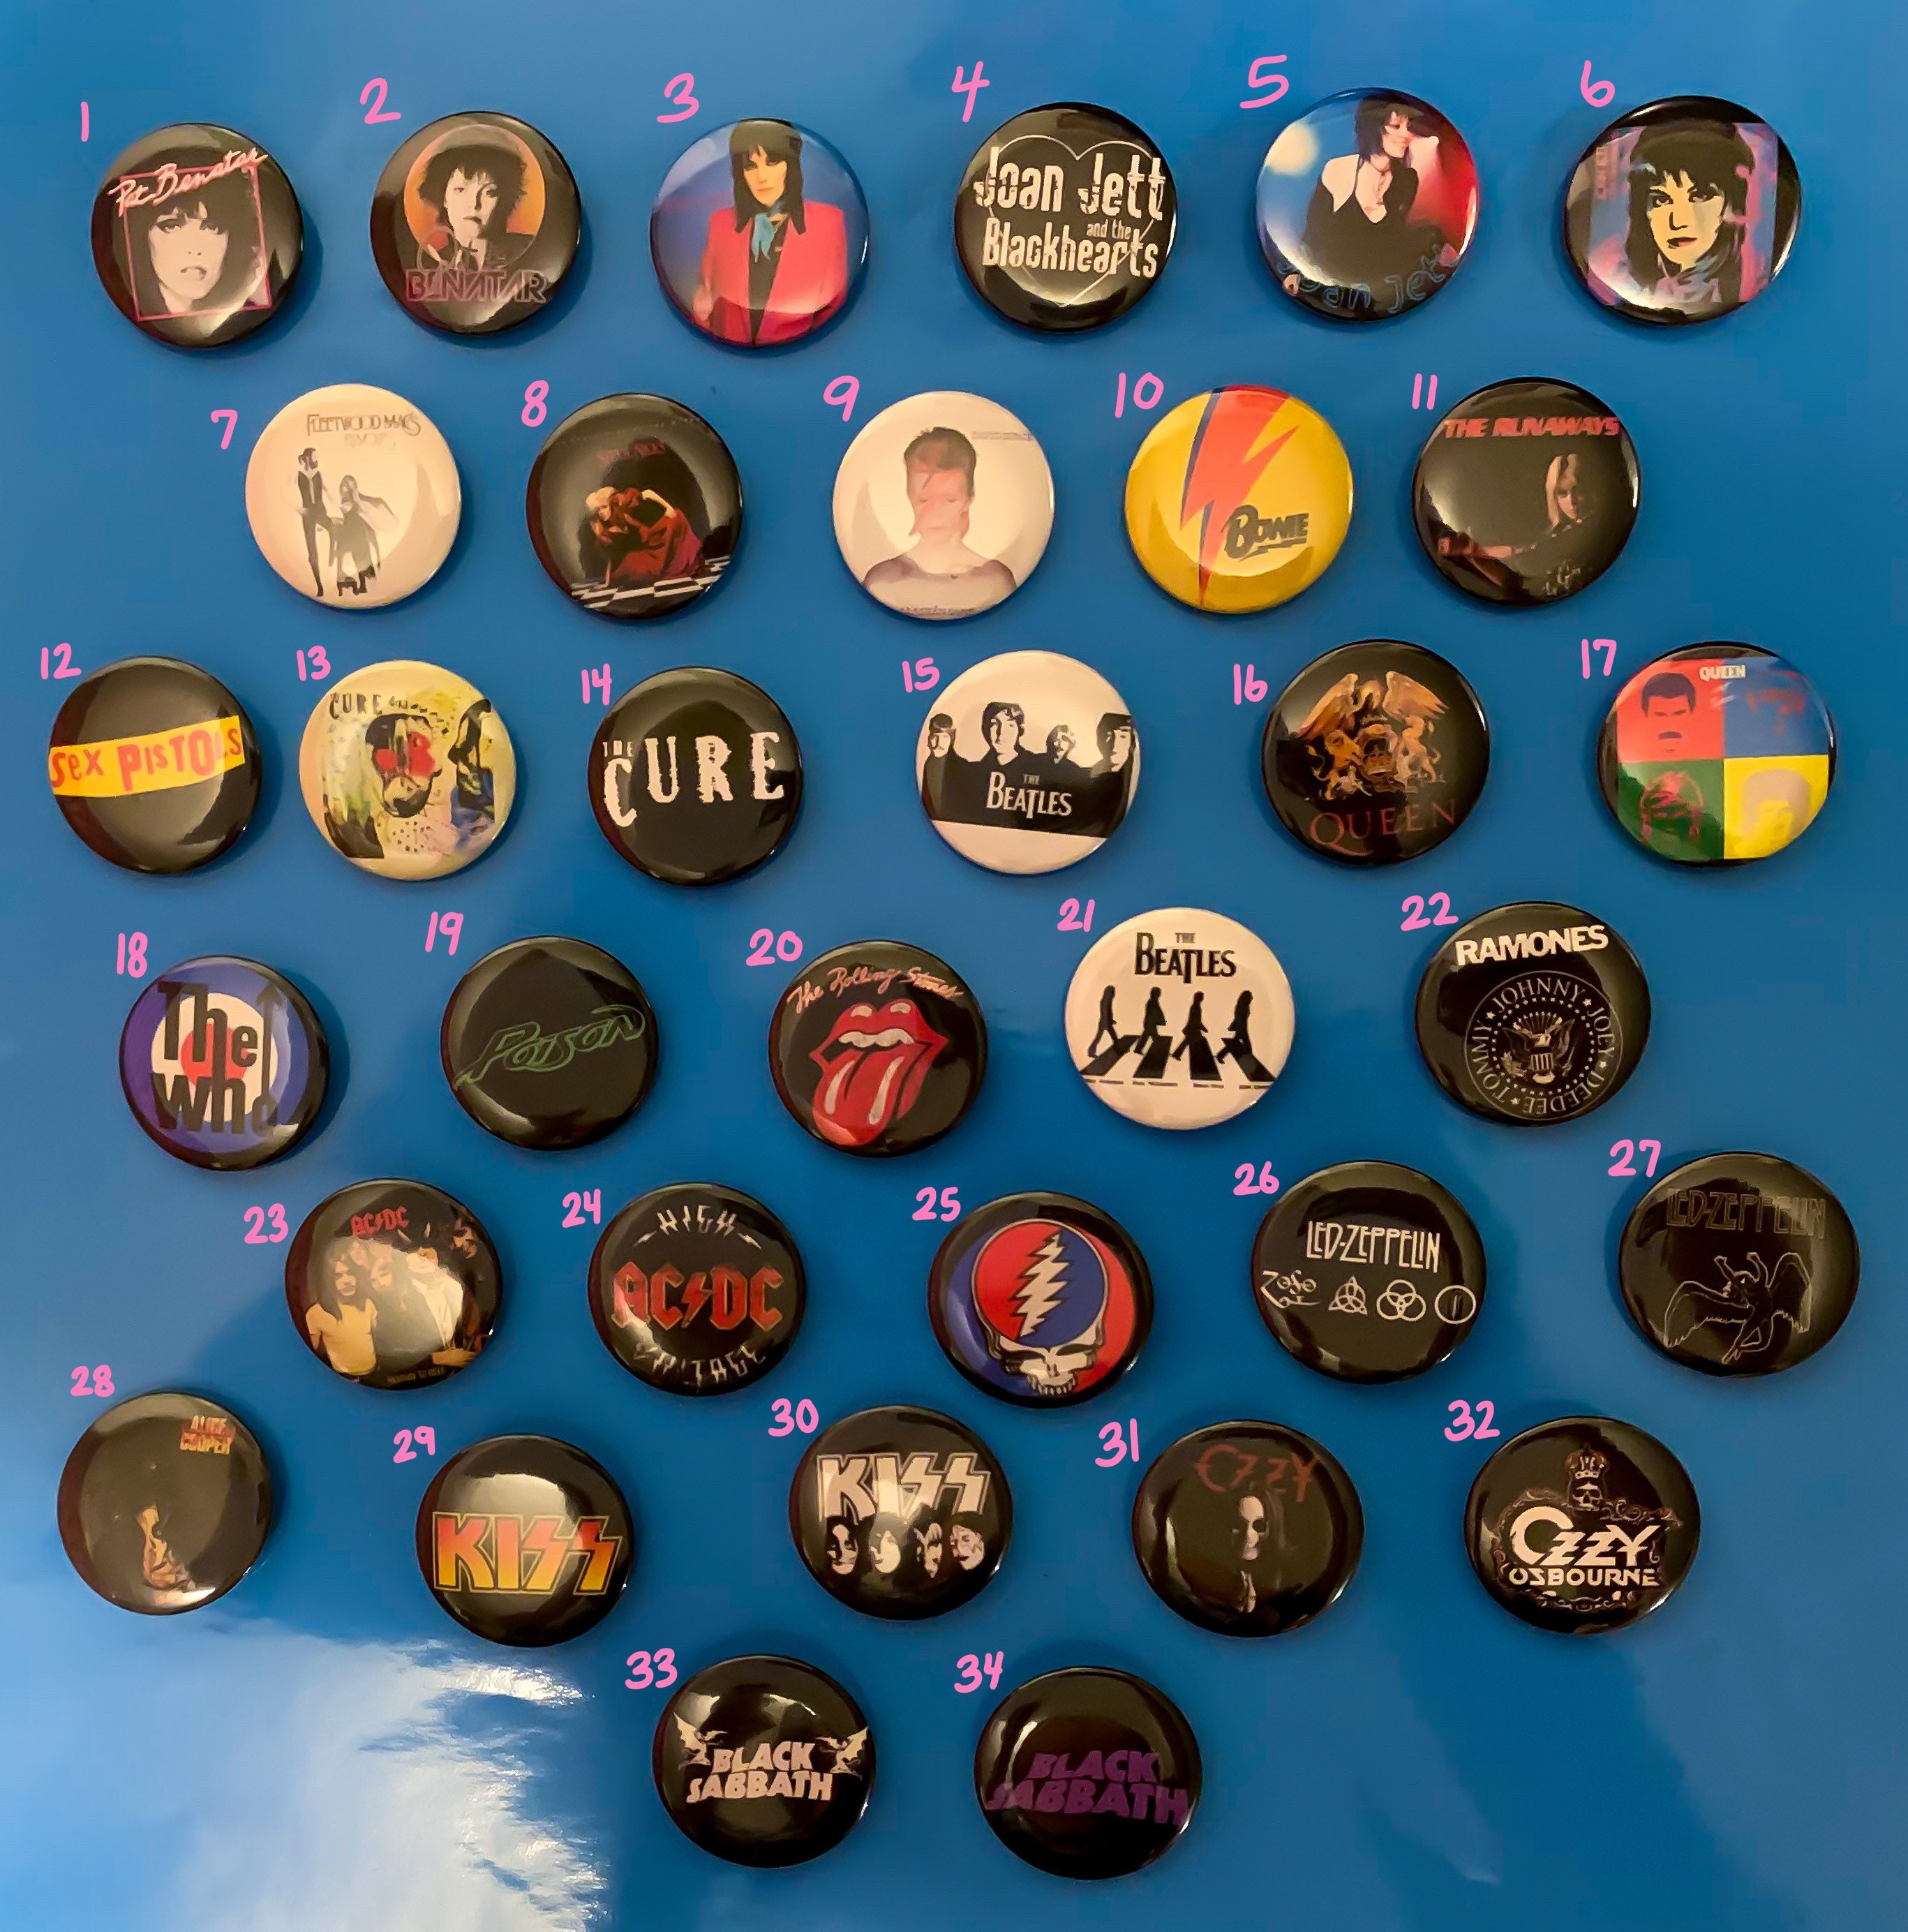 Punk Pins — DK enamel pin